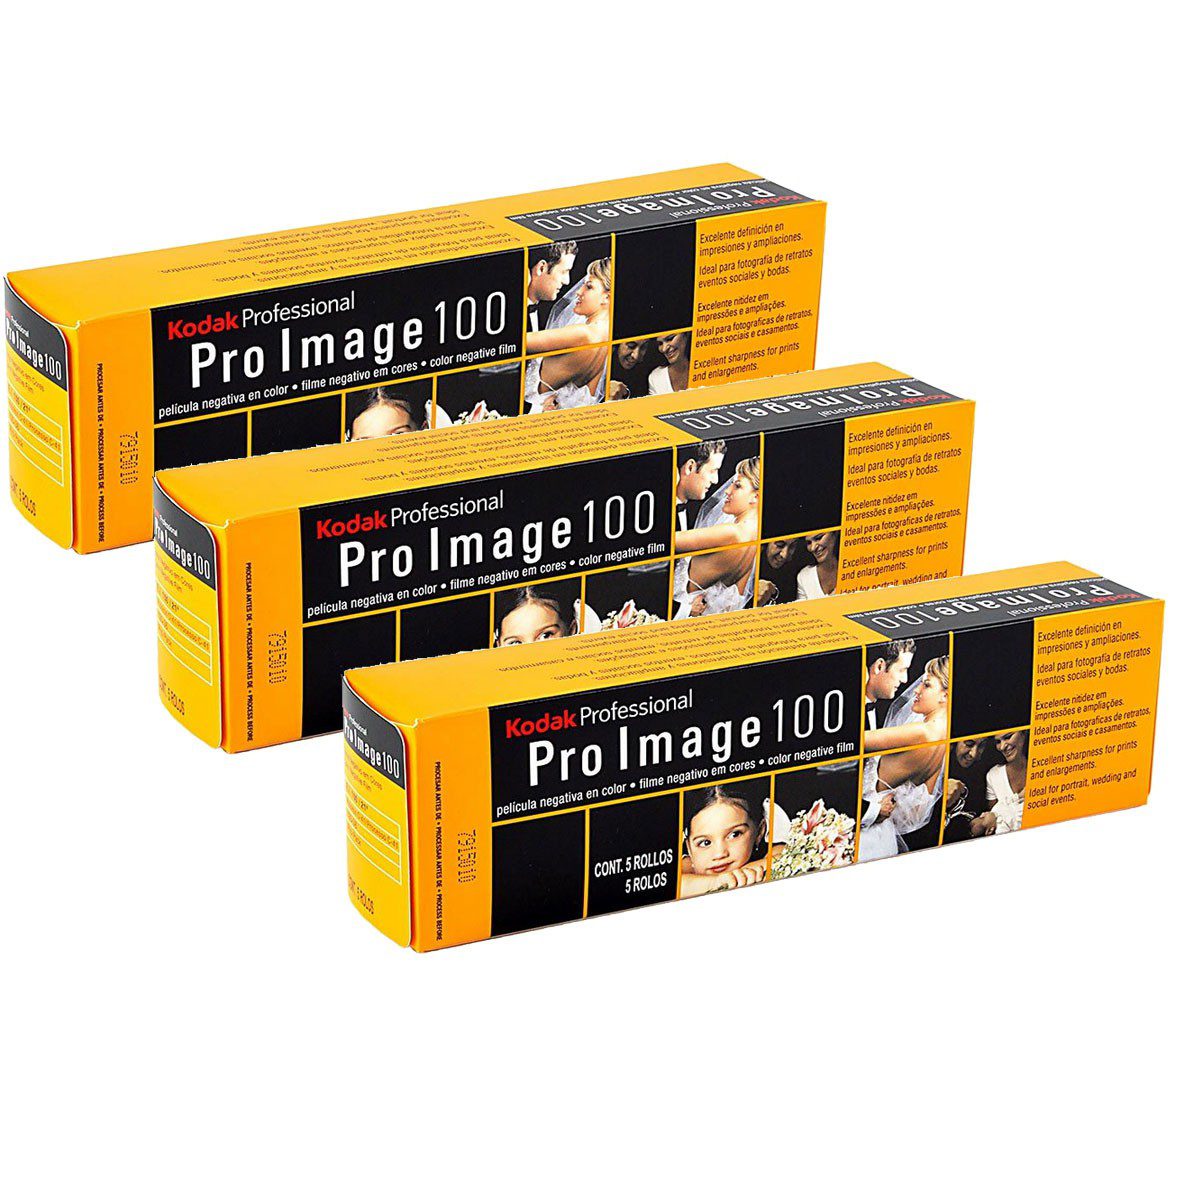 Kodak’s Professional Pro Image 100 Arrives in the UK